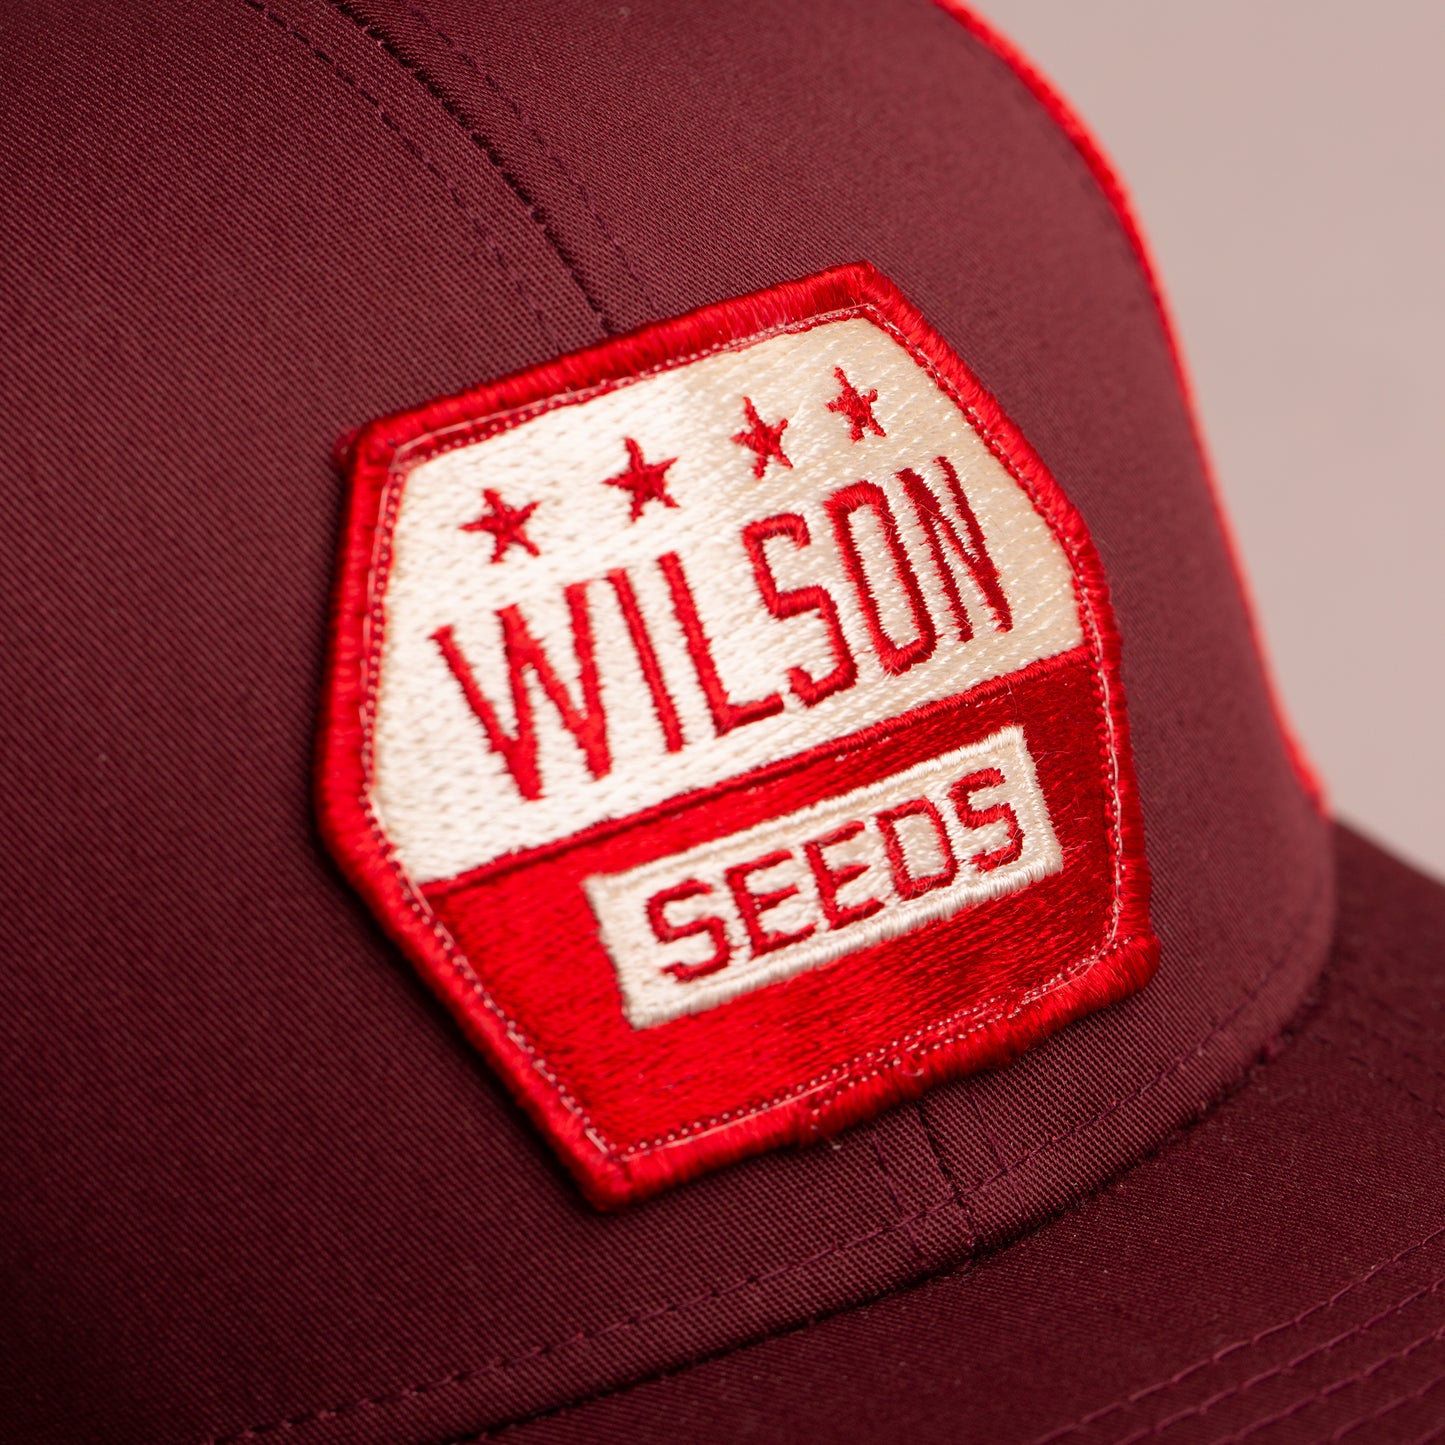 Wilson Seeds